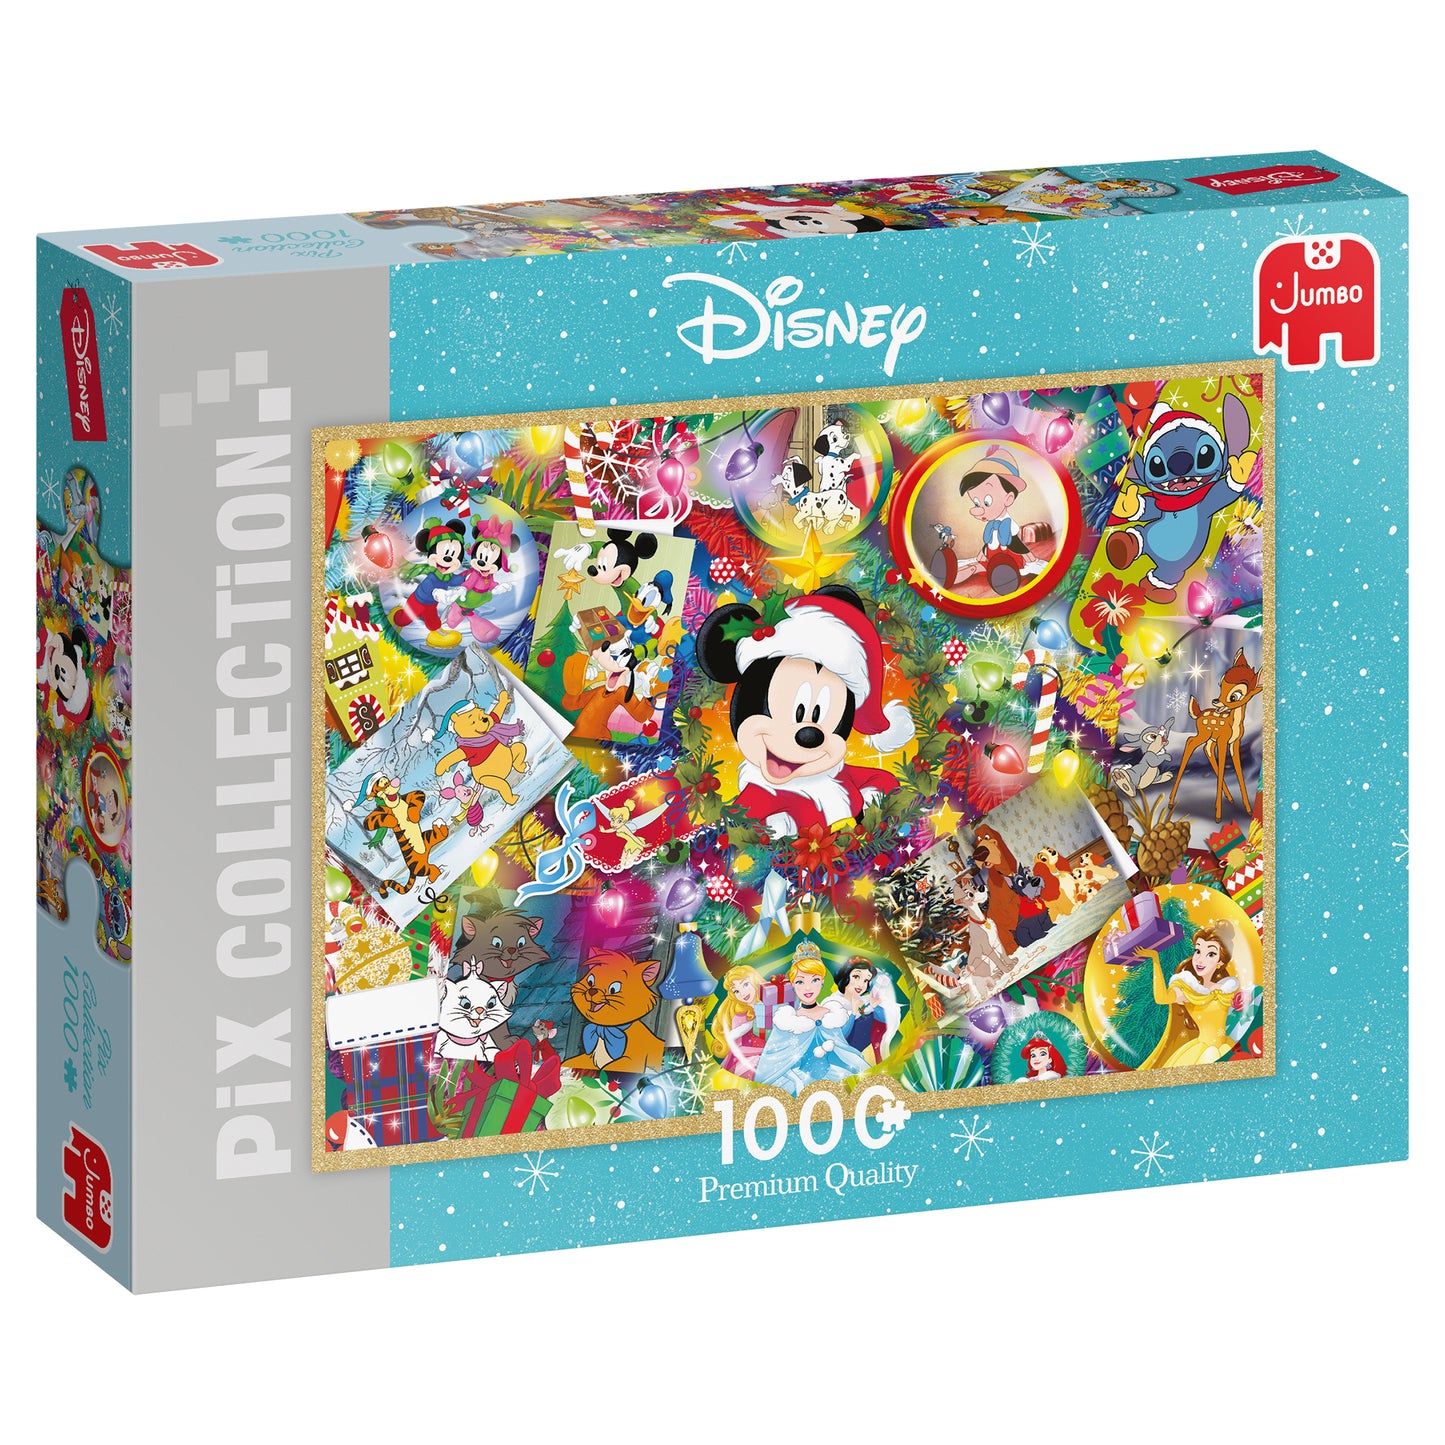 Jumbo - Disney Pix Collection Christmas - 1000 Piece Jigsaws